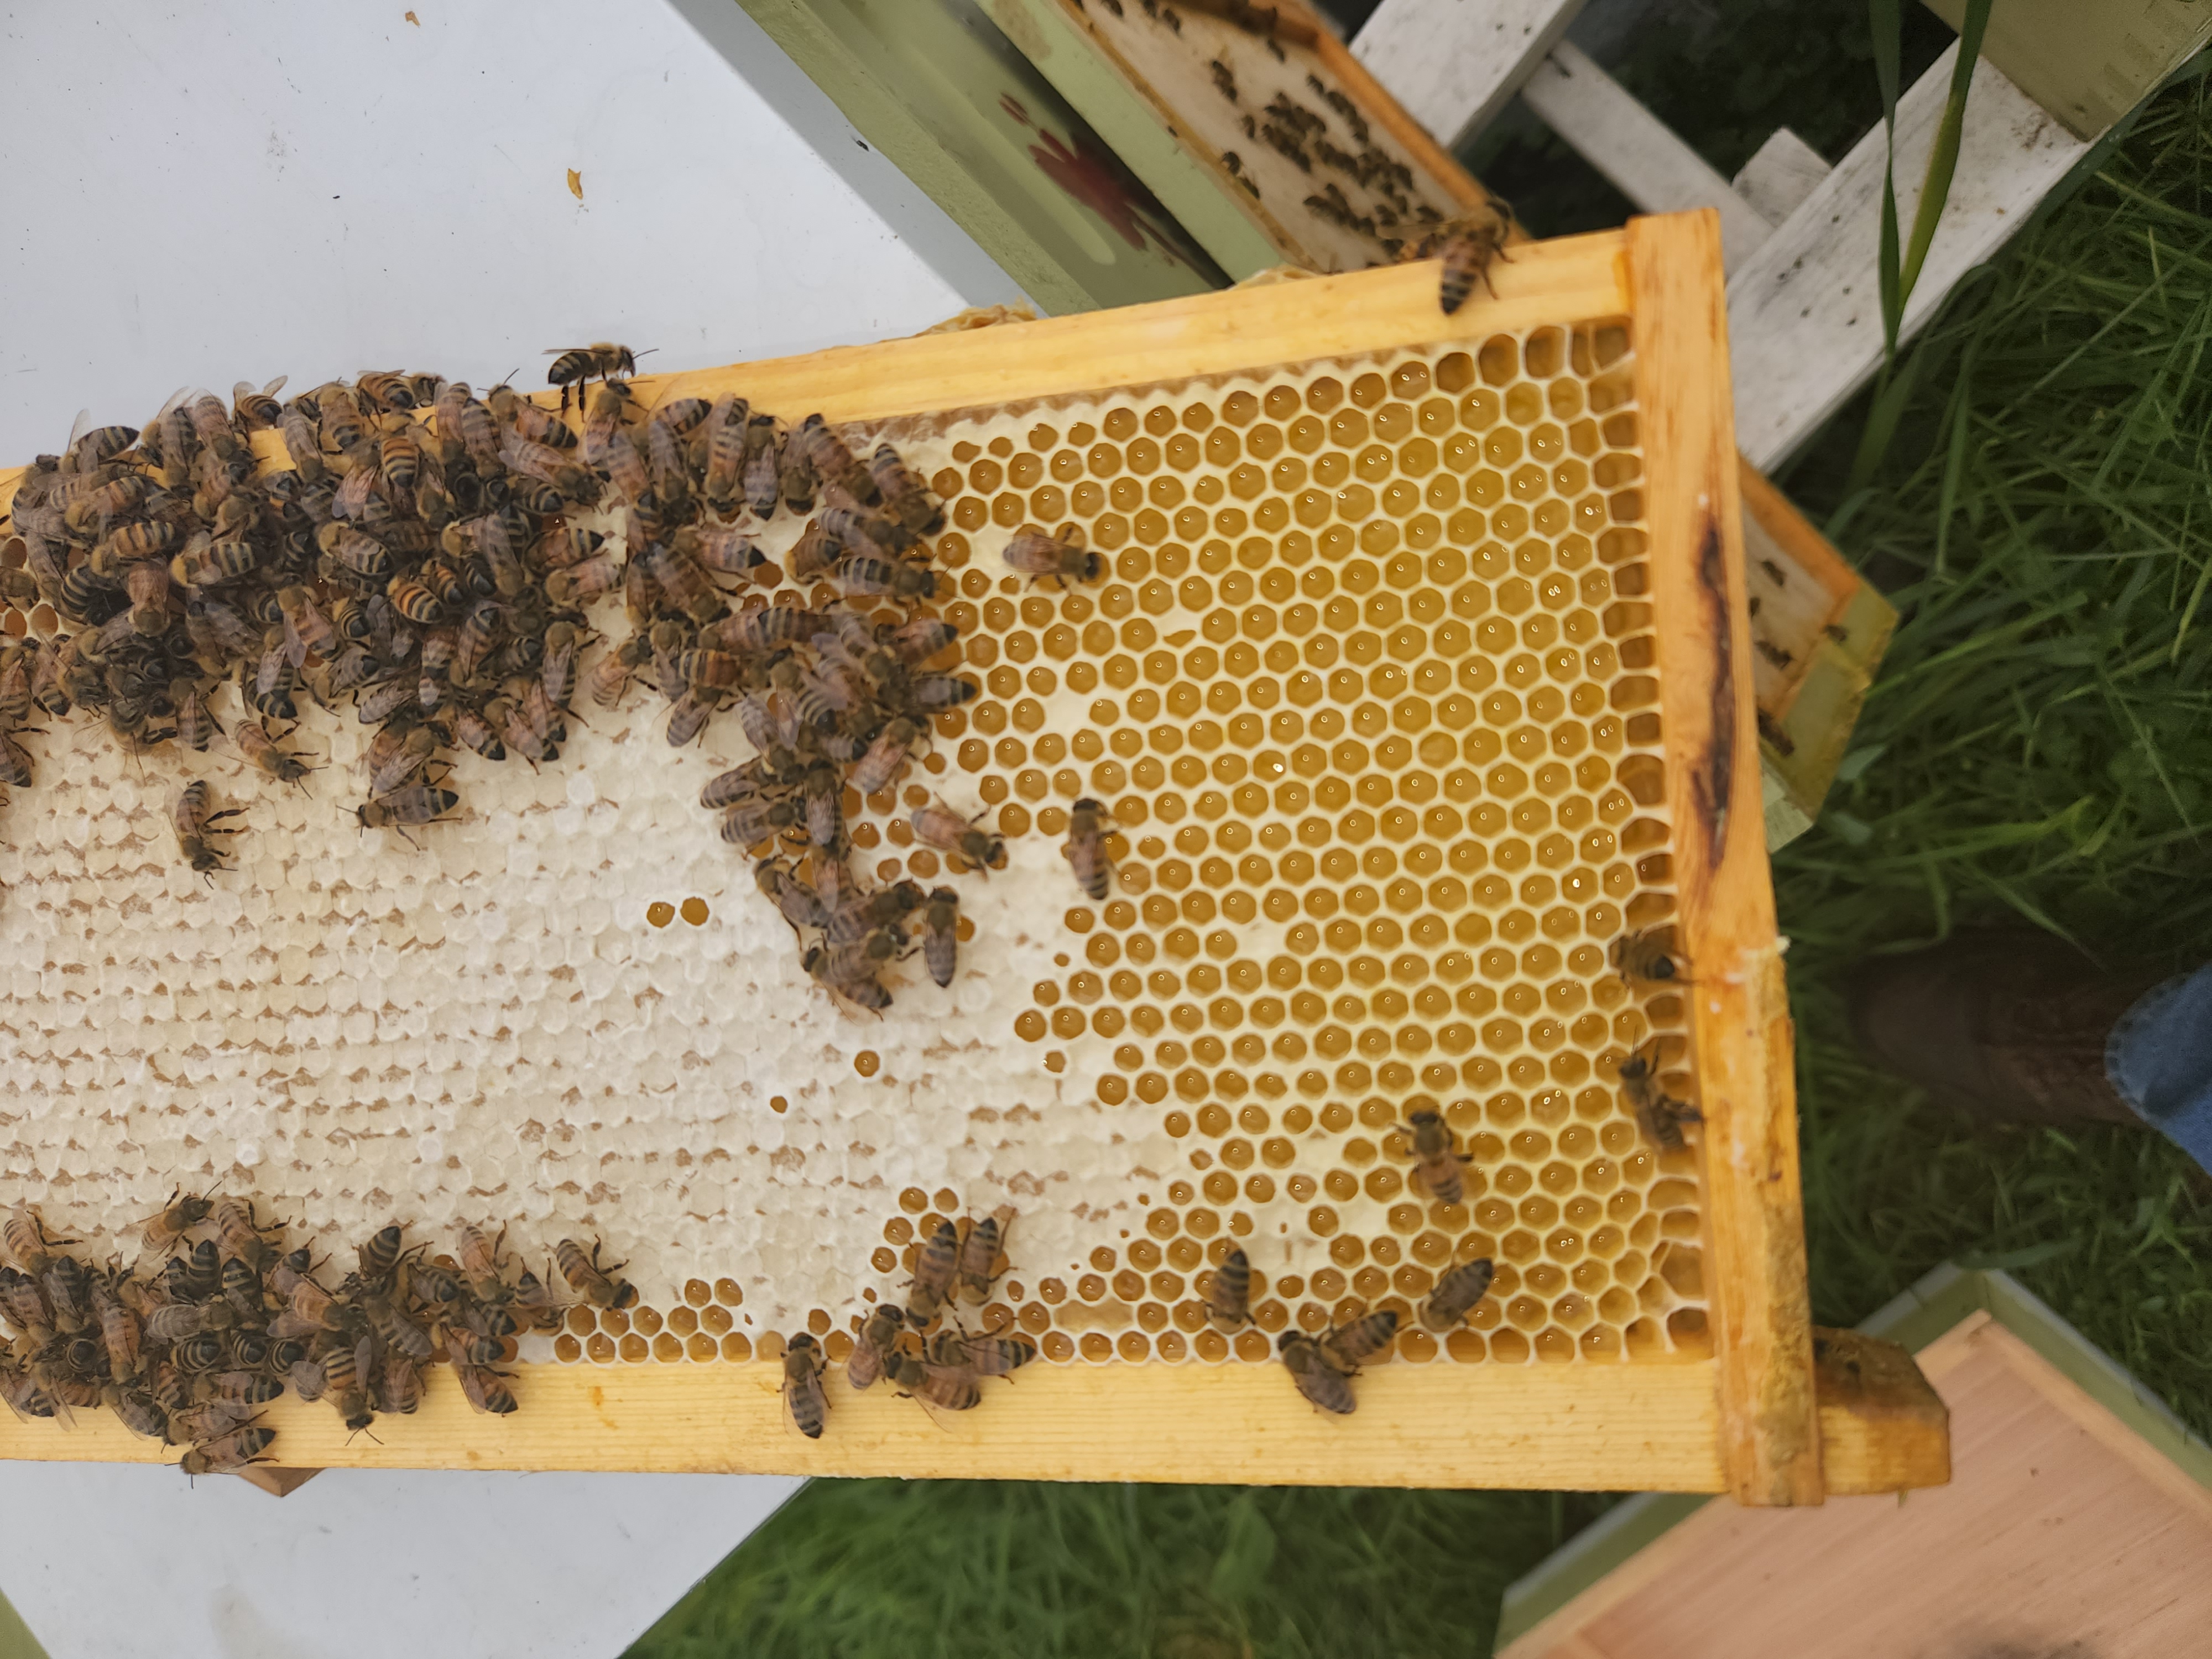 Honeybees on comb producing honey